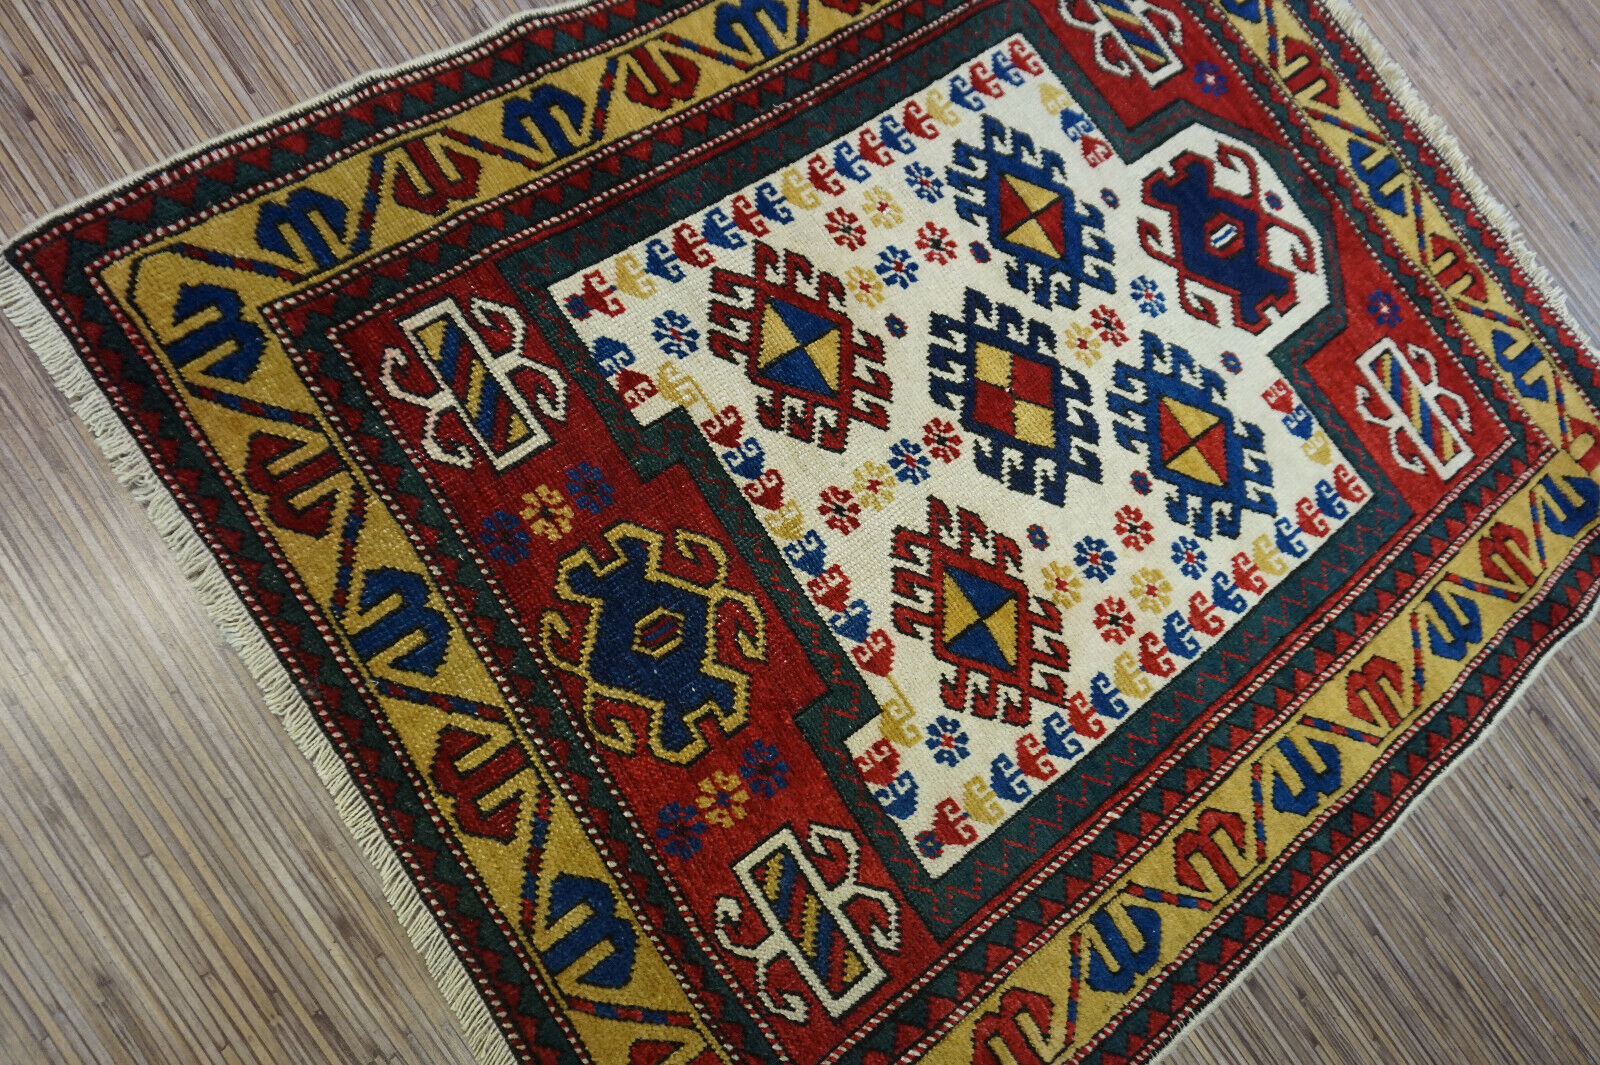 Close-up of the intricate stitching on the Handmade Antique Caucasian Kazak Prayer Rug